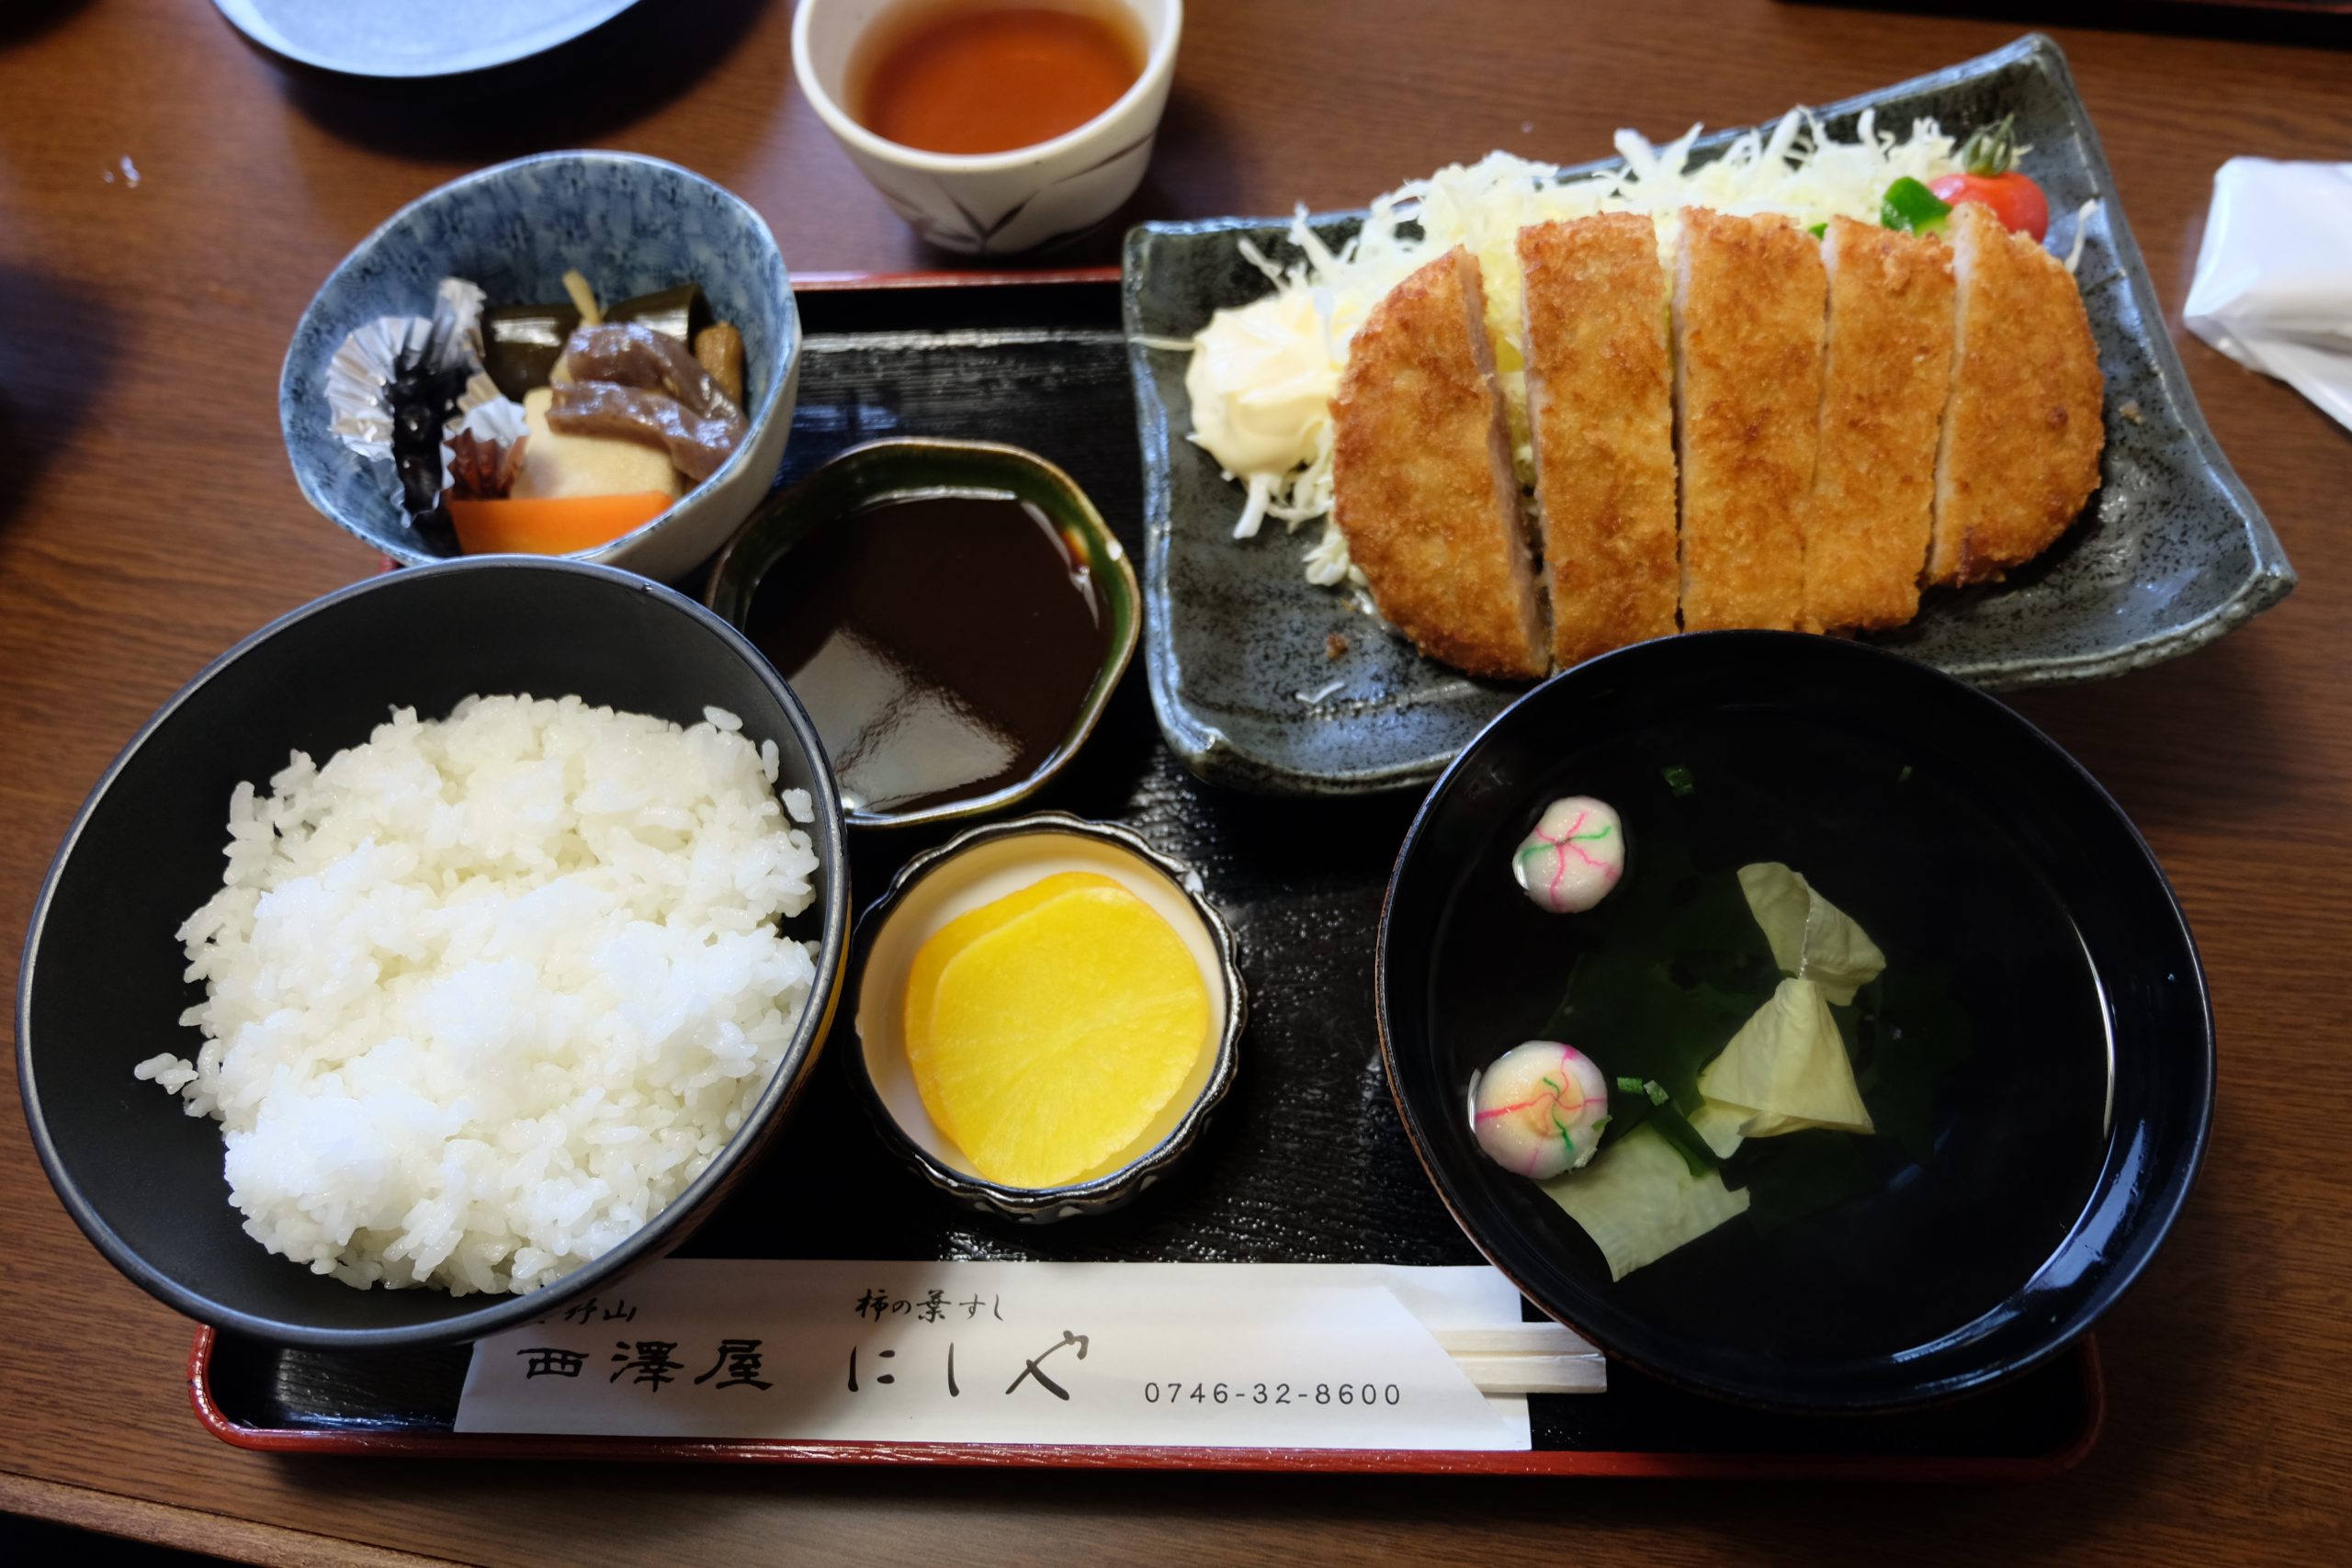 Delicious tonkatsu complete meal in Japan